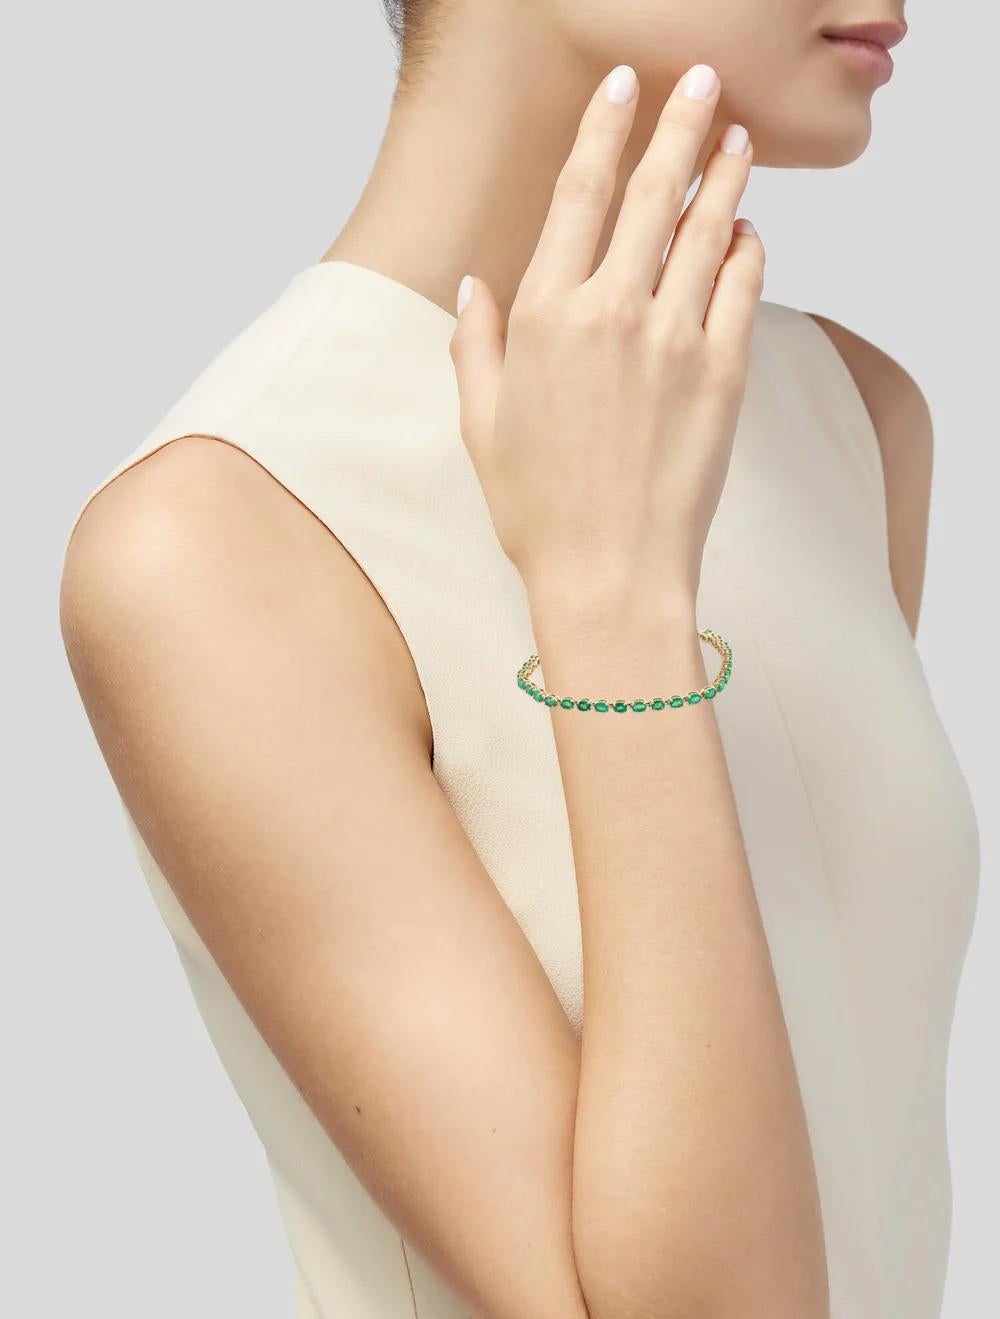 Oval Cut 14K Gold 4.42ctw Emerald Link Bracelet - Fine Jewelry, Luxury Statement Piece For Sale